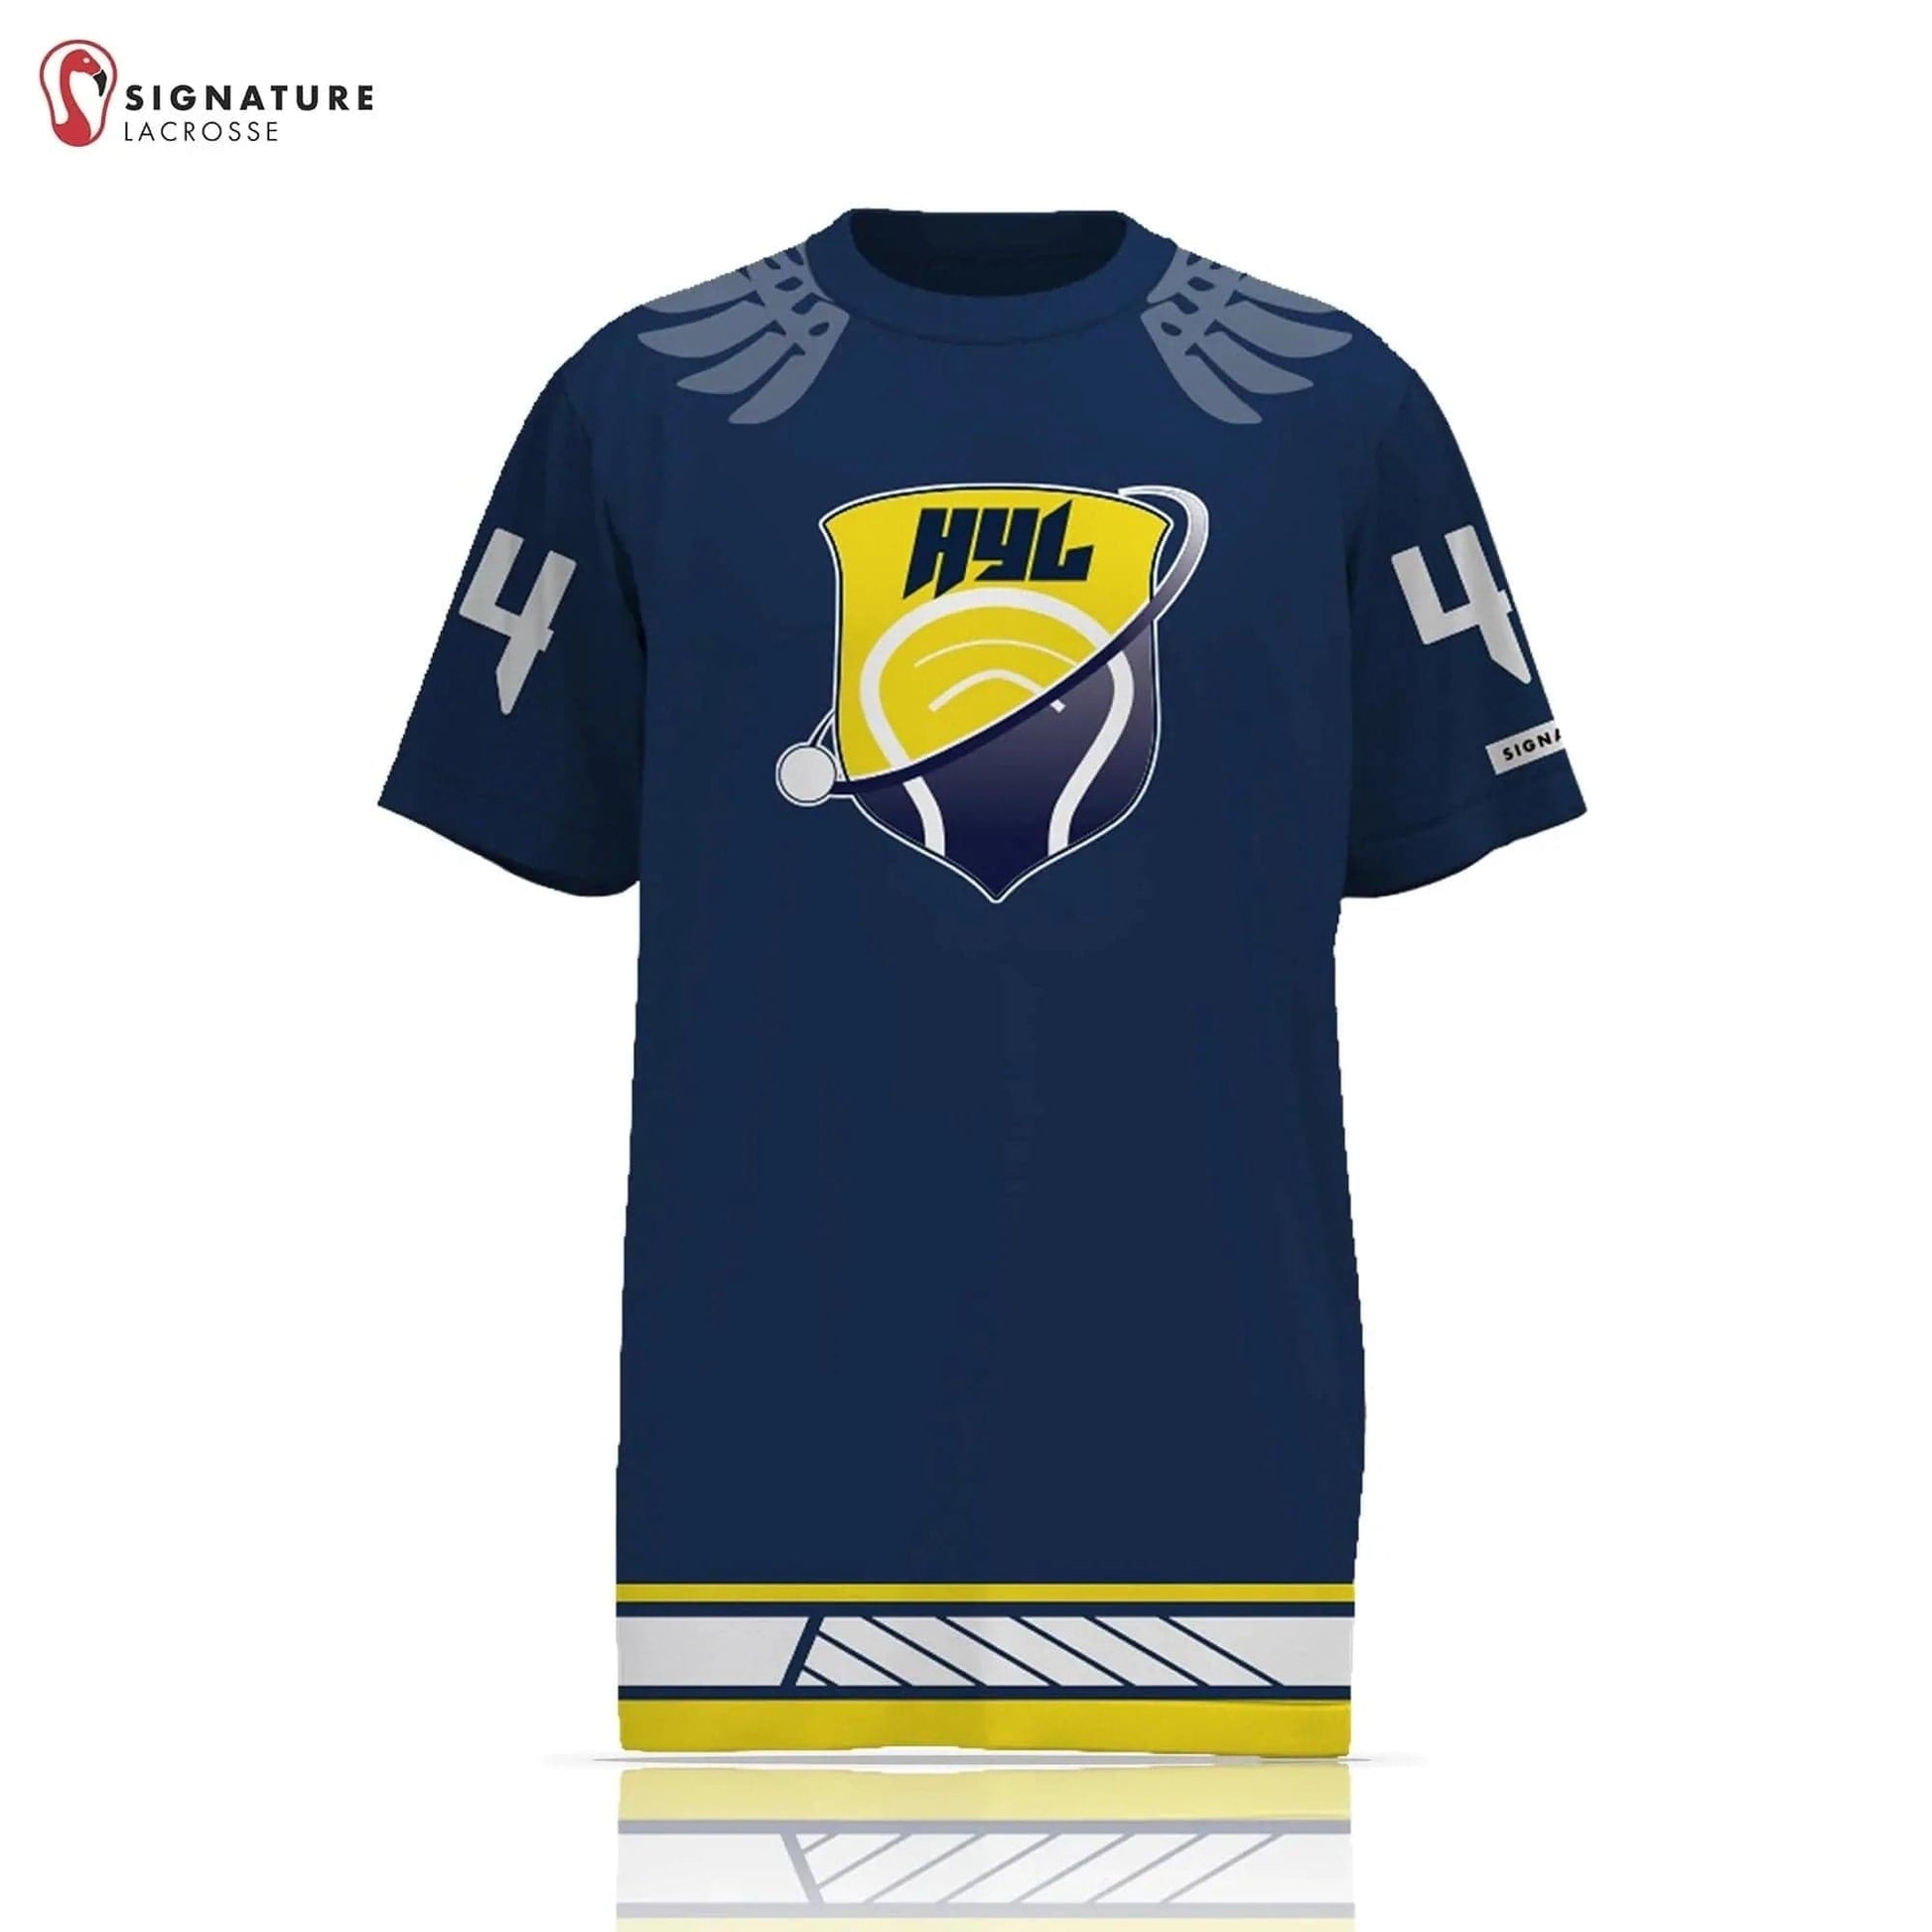 Hudsonville Area Lacrosse Player Short Sleeve Shooting Shirt: 2035 Signature Lacrosse